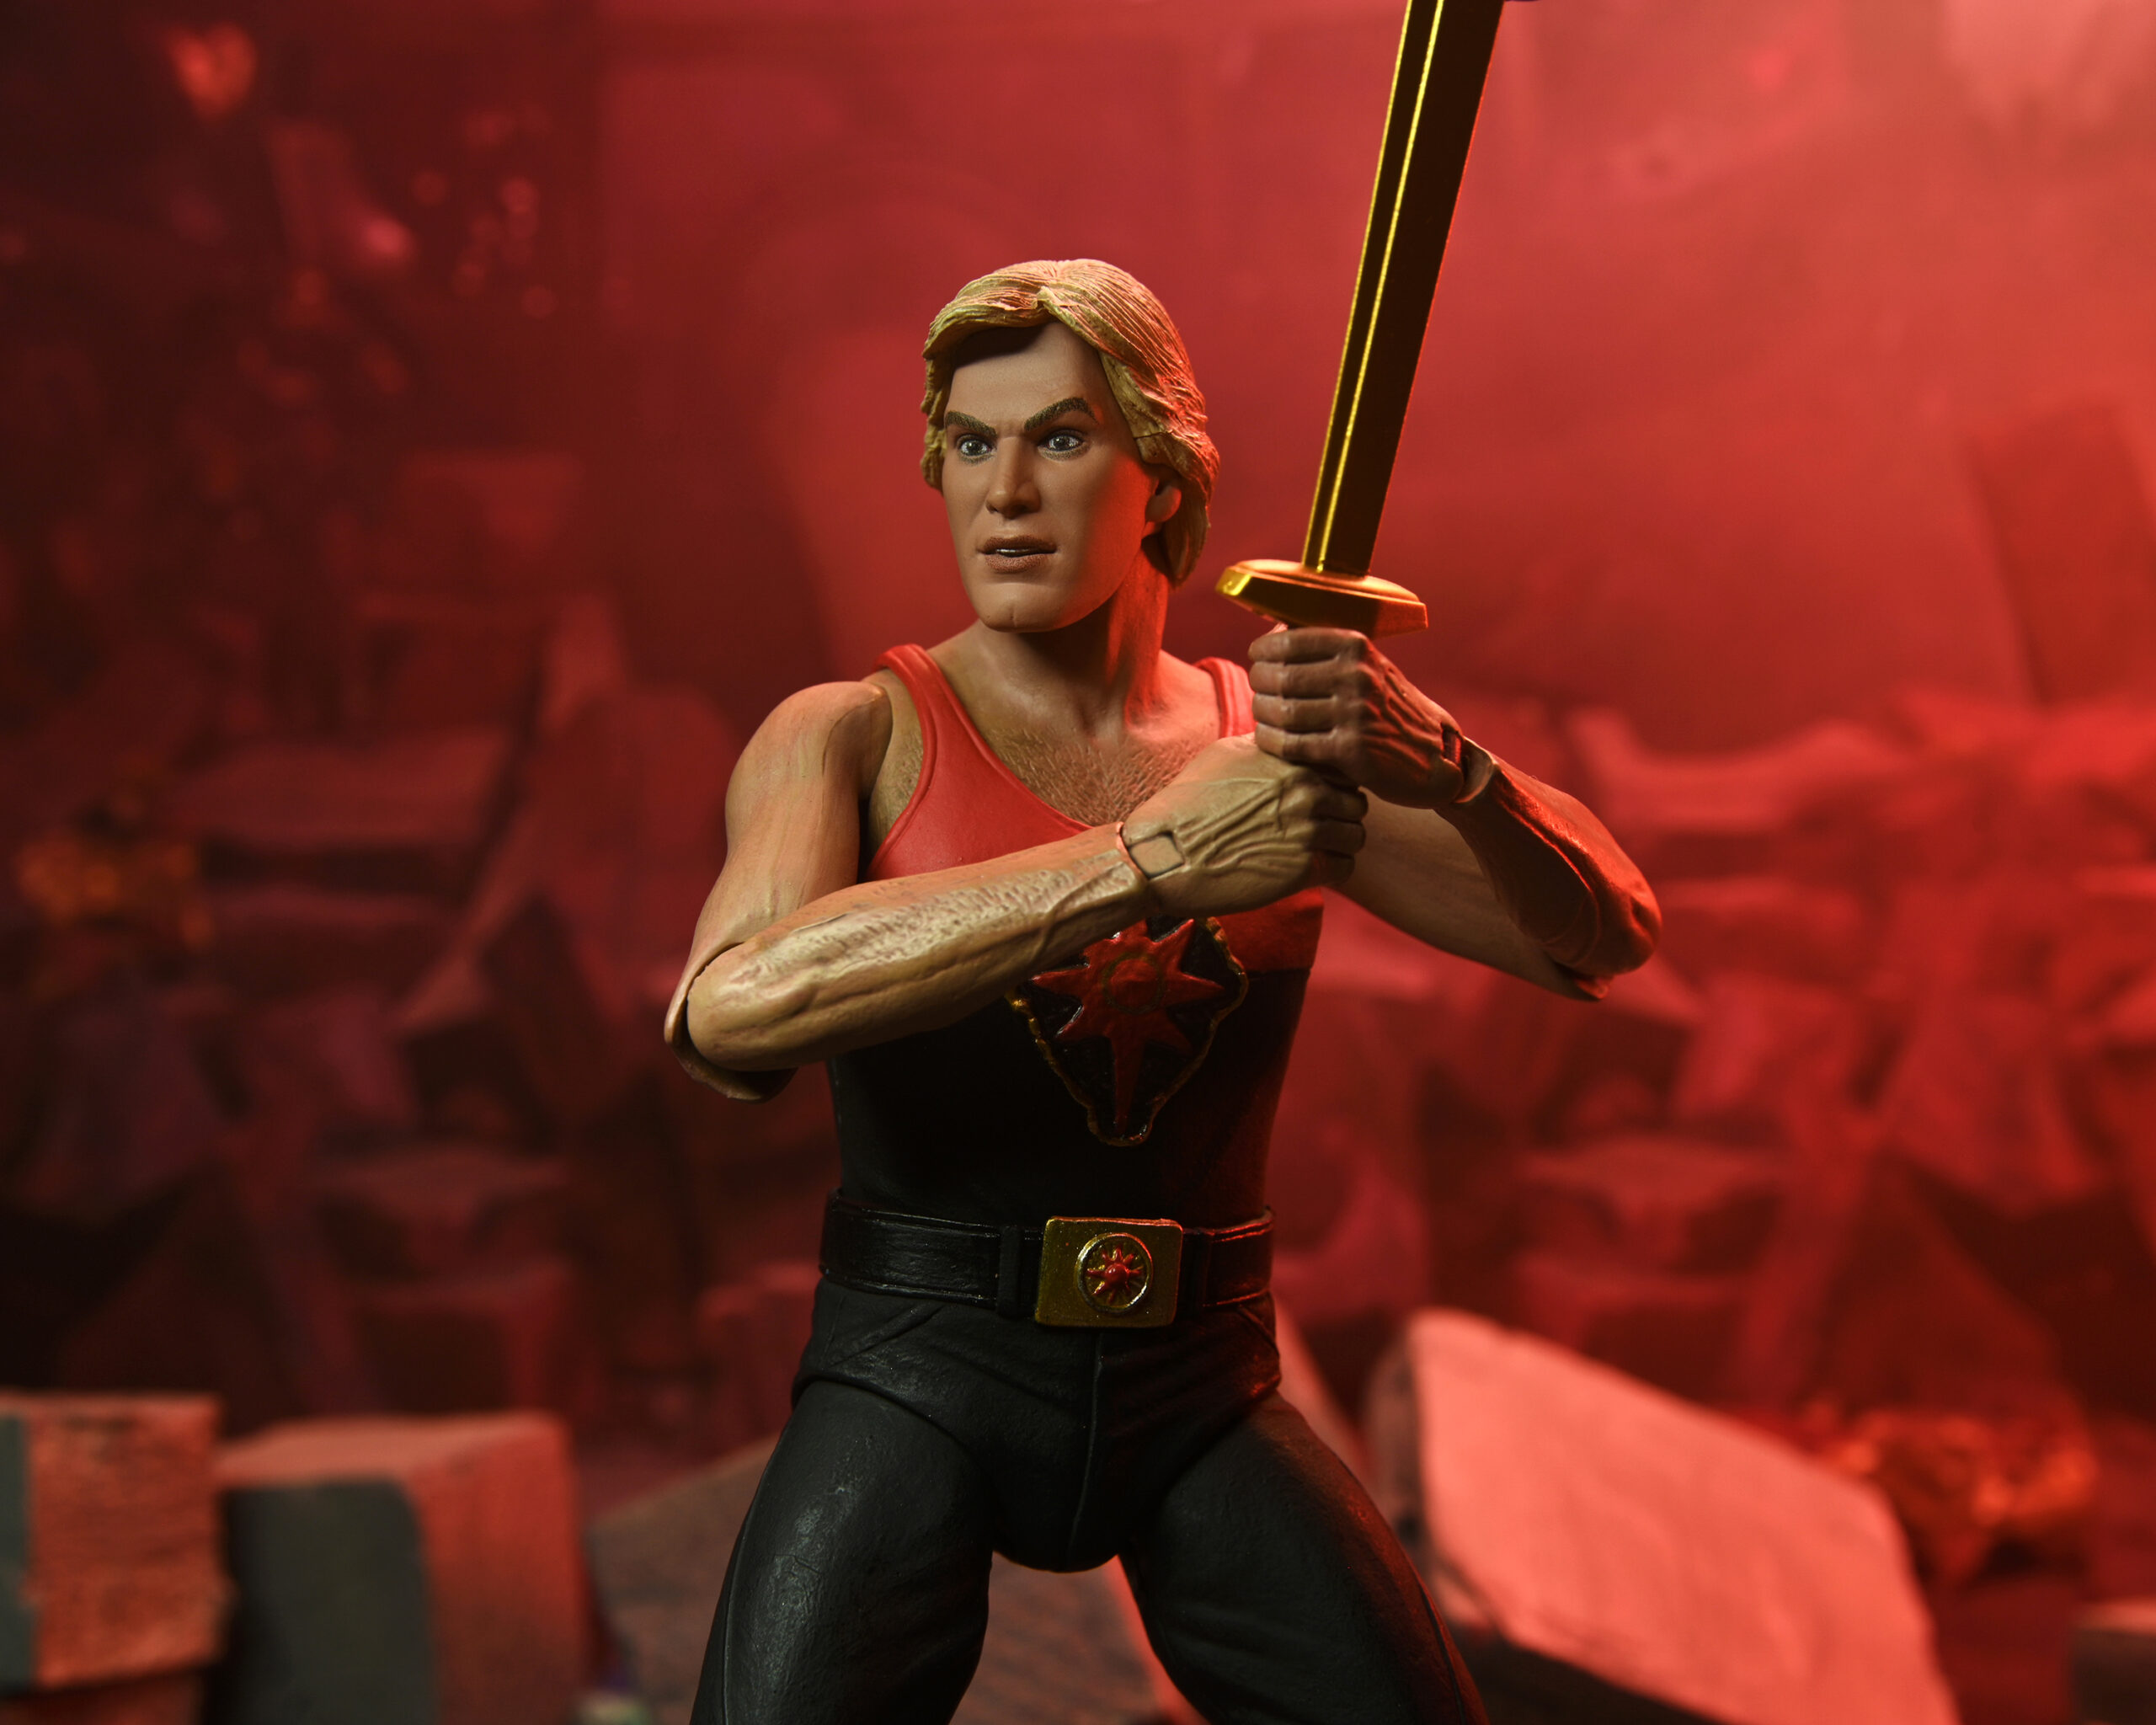 Flash Gordon (1980) – 7” Scale Action Figure – Ultimate Flash 